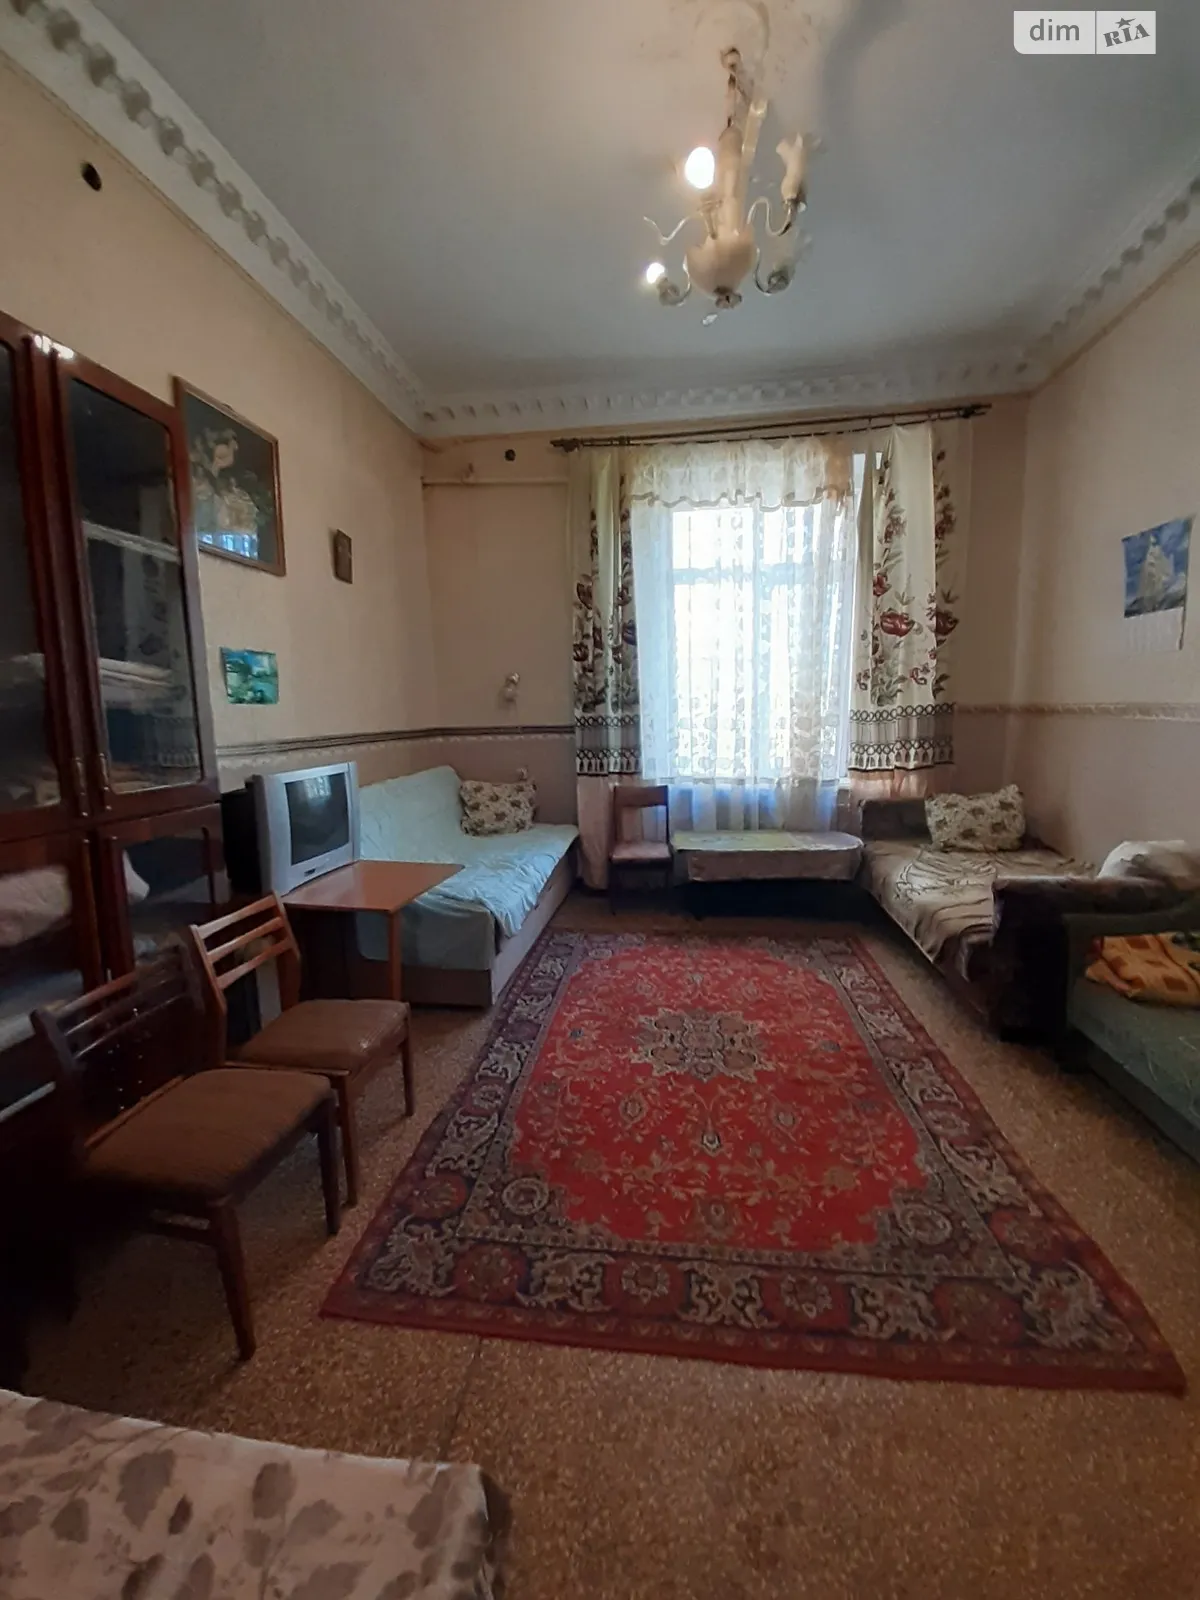 Сдается в аренду комната 80 кв. м в Одессе, цена: 4000 грн - фото 1